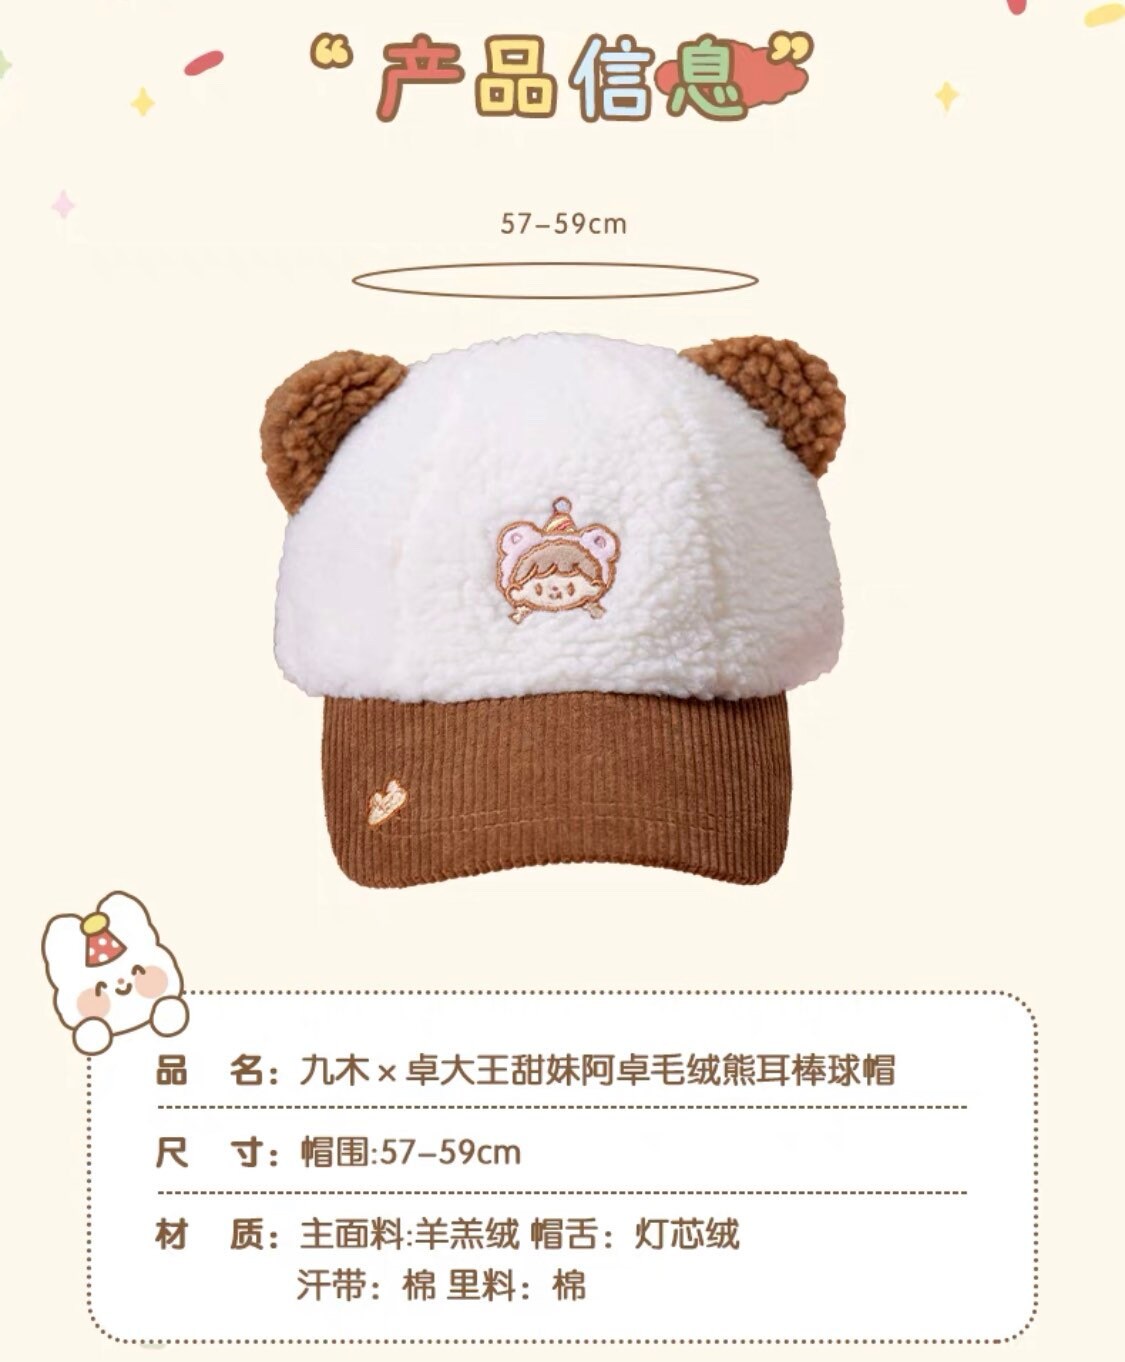 Molinta 「Baking Park」series stationery cute bear plush hat